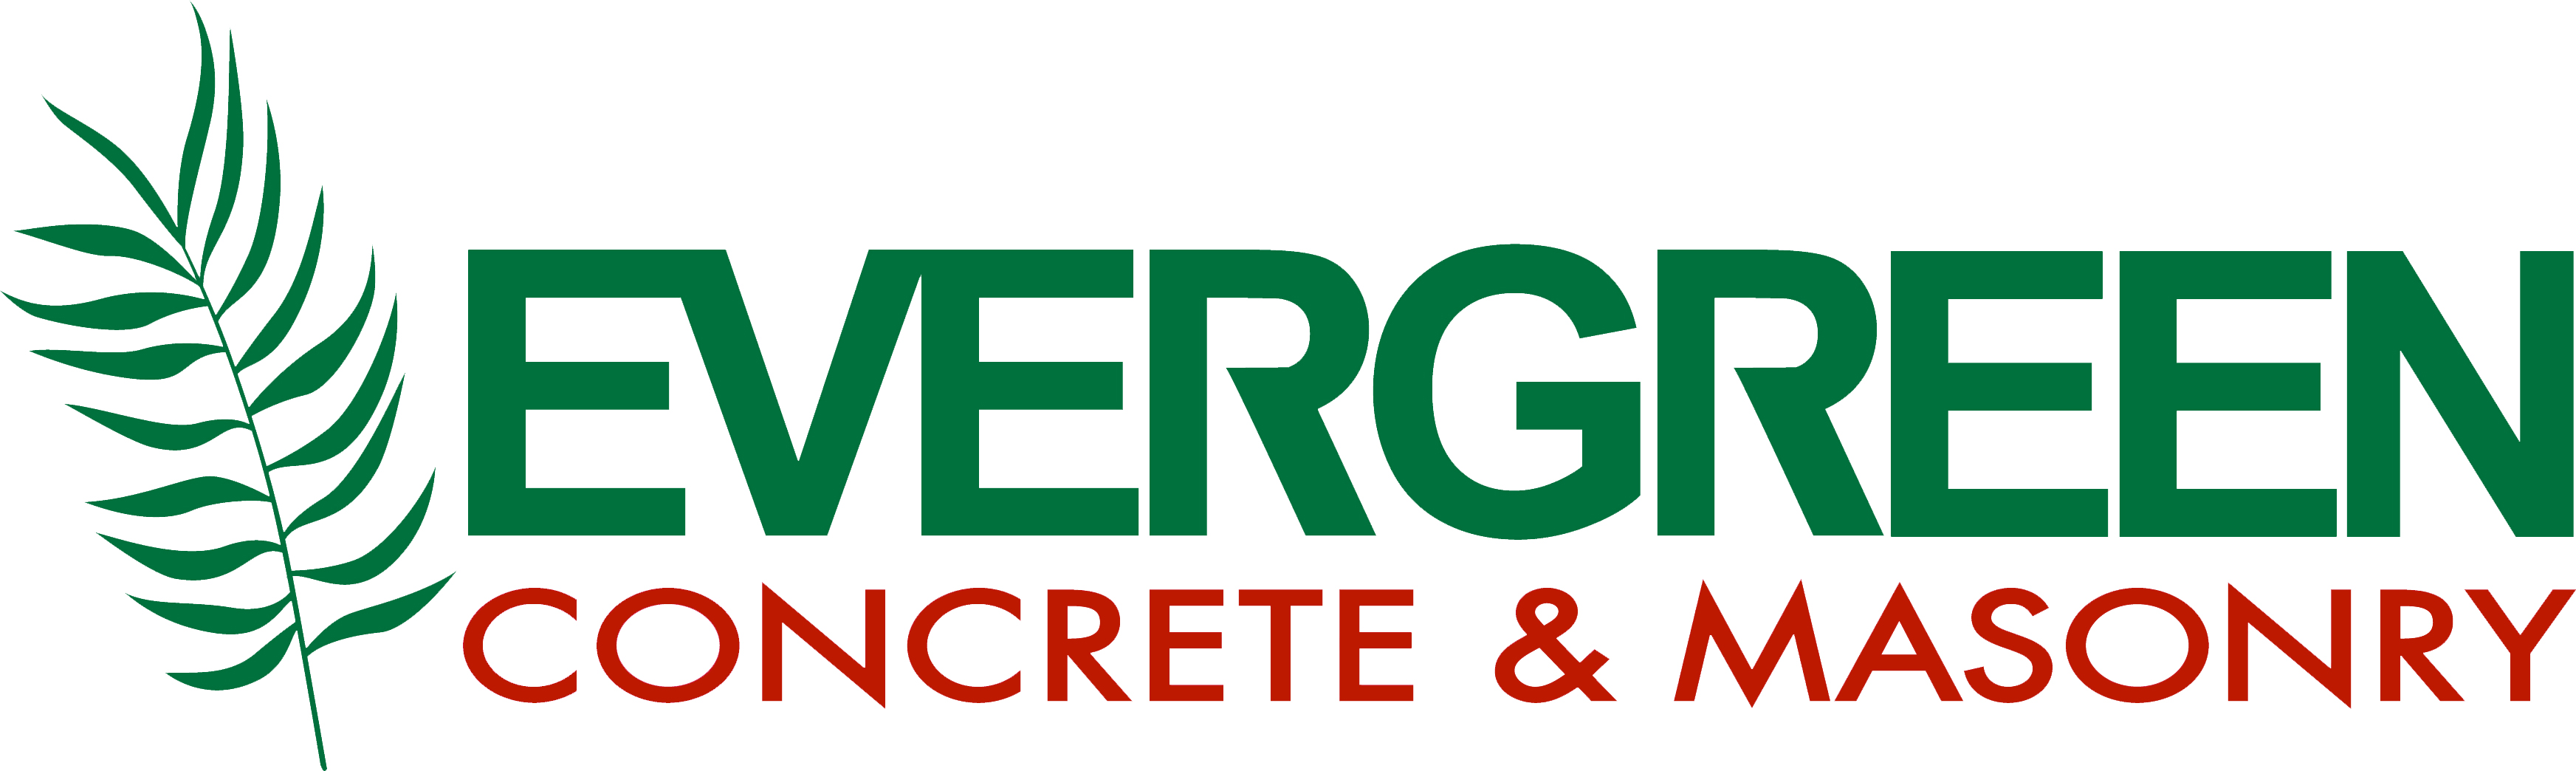 Evergreen Concrete & Masonry Logo